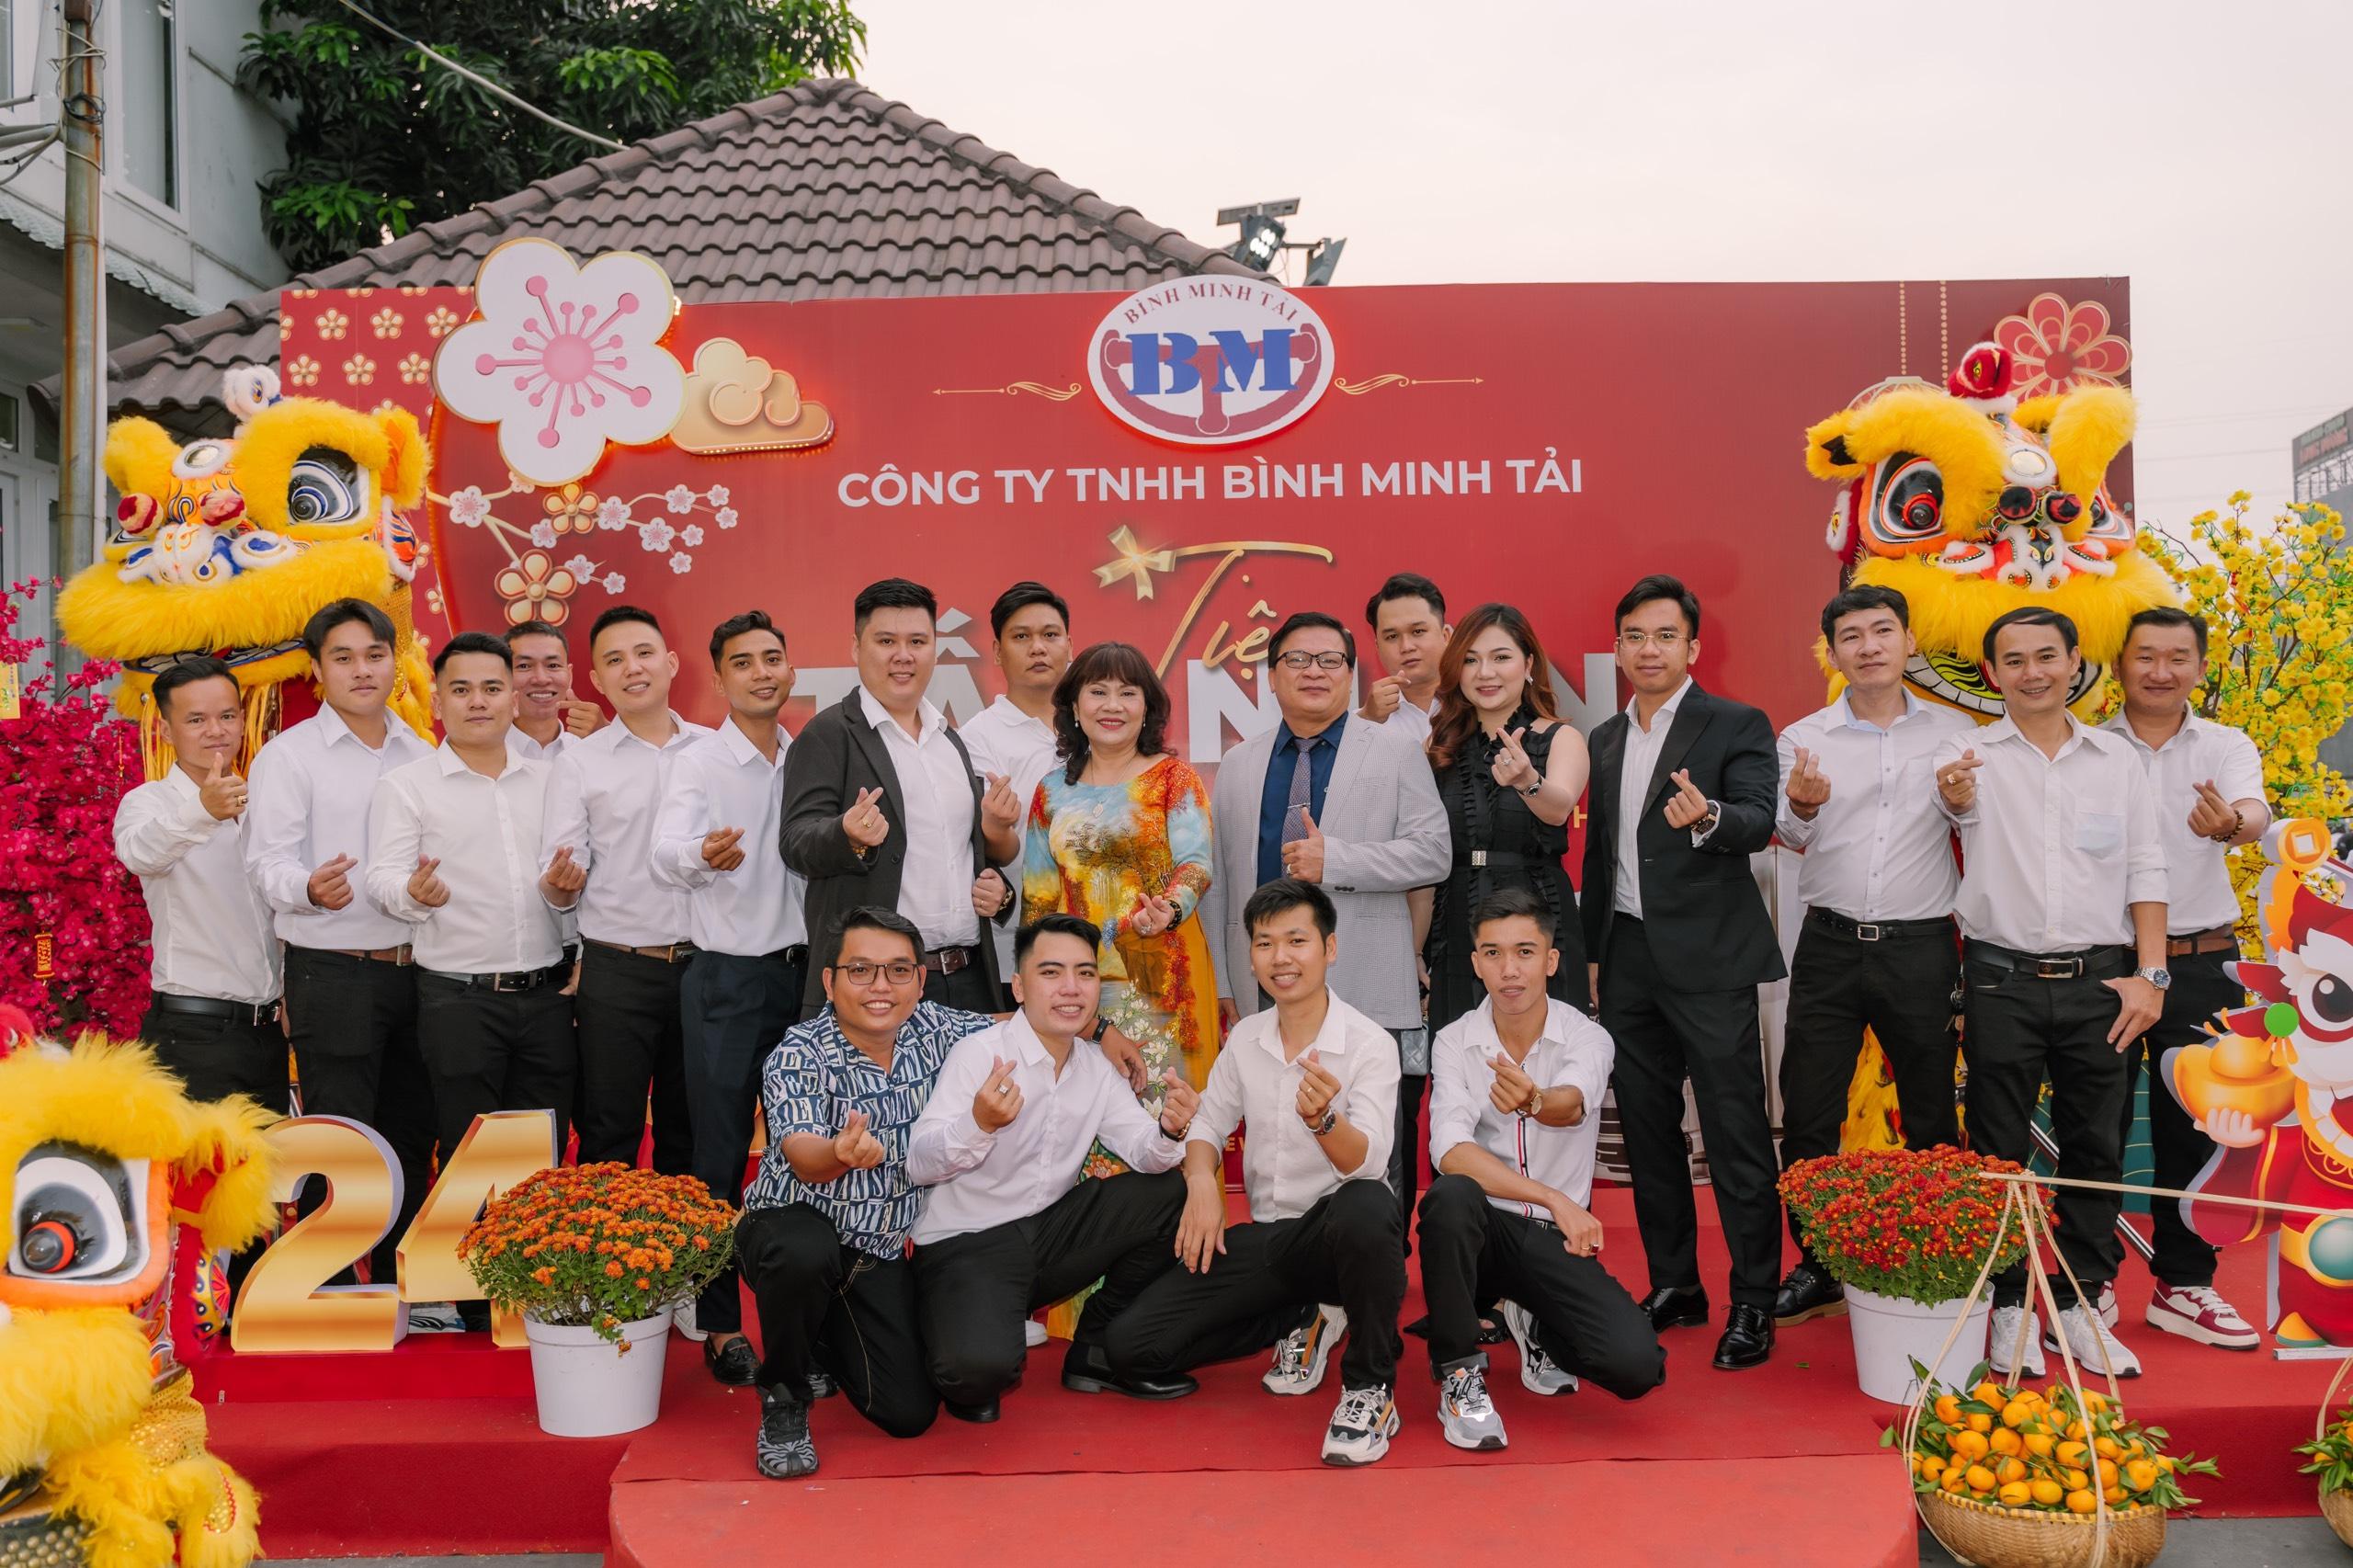 Latest Công Ty TNHH Bình Minh Tải employment/hiring with high salary & attractive benefits